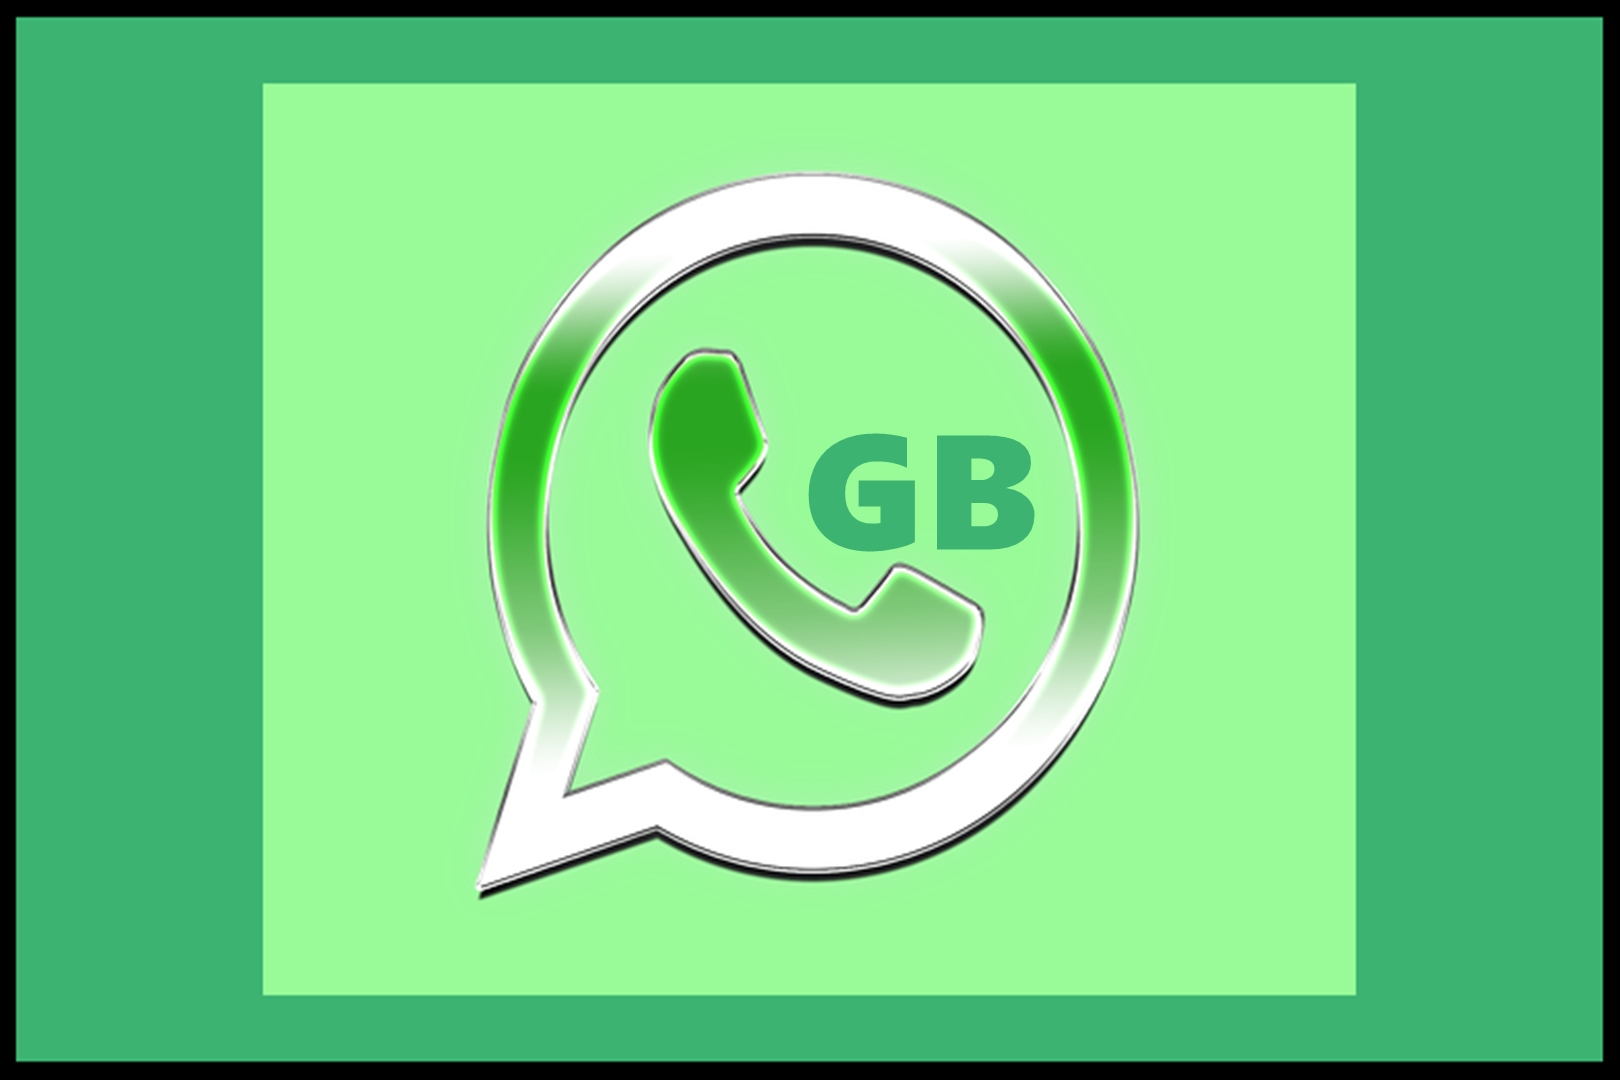 Link GB Whatsapp Pro v1985 Terupdate, Tersedia Fitur Translate Bahasa dan Anti Banned